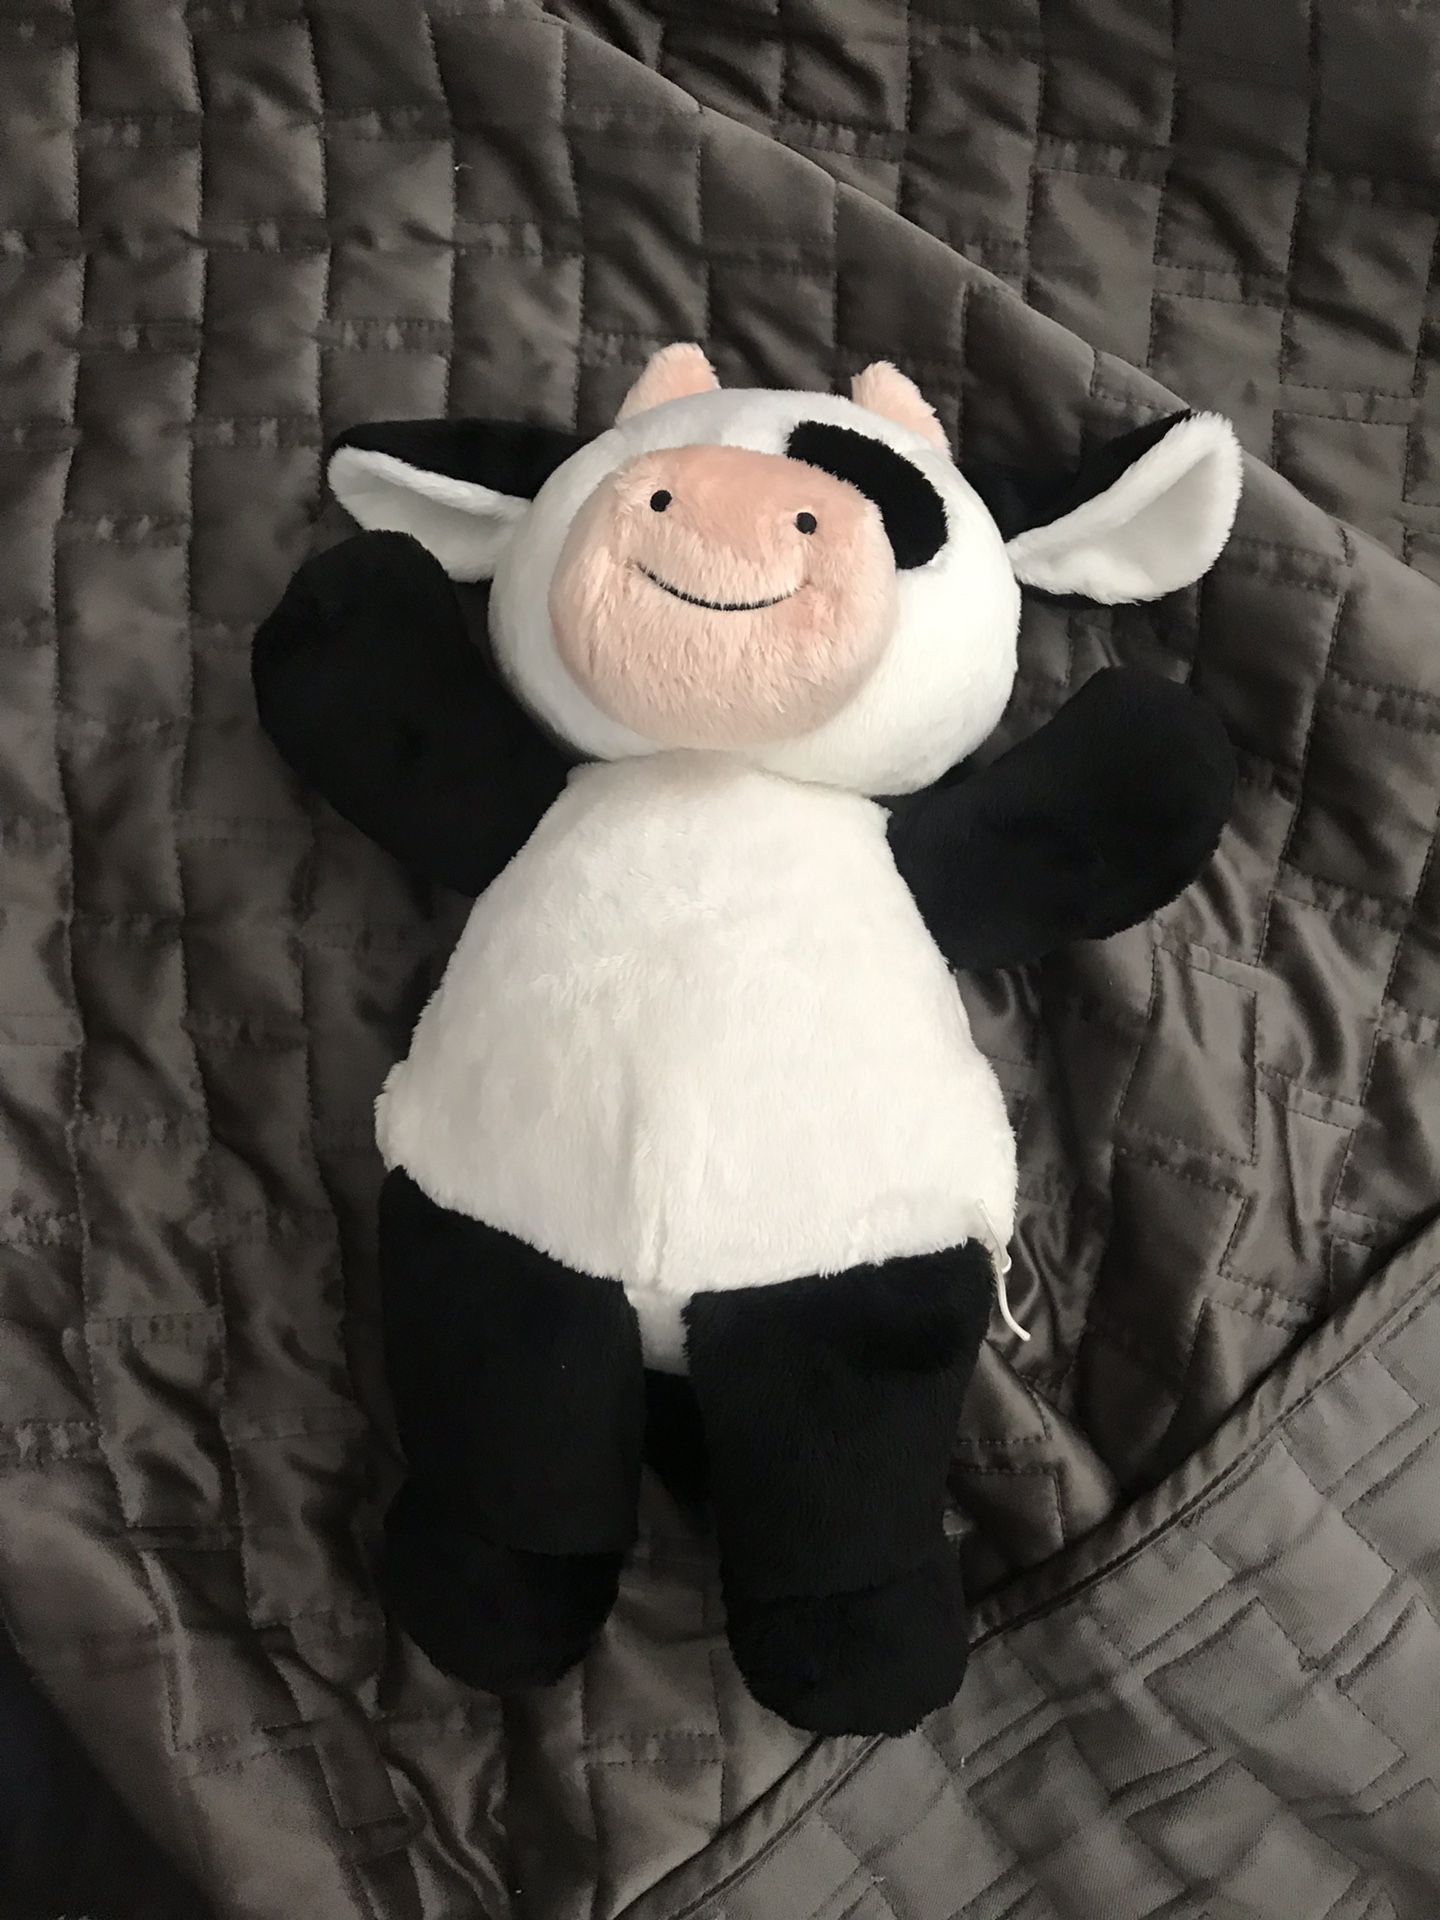 Cow stuffed animal